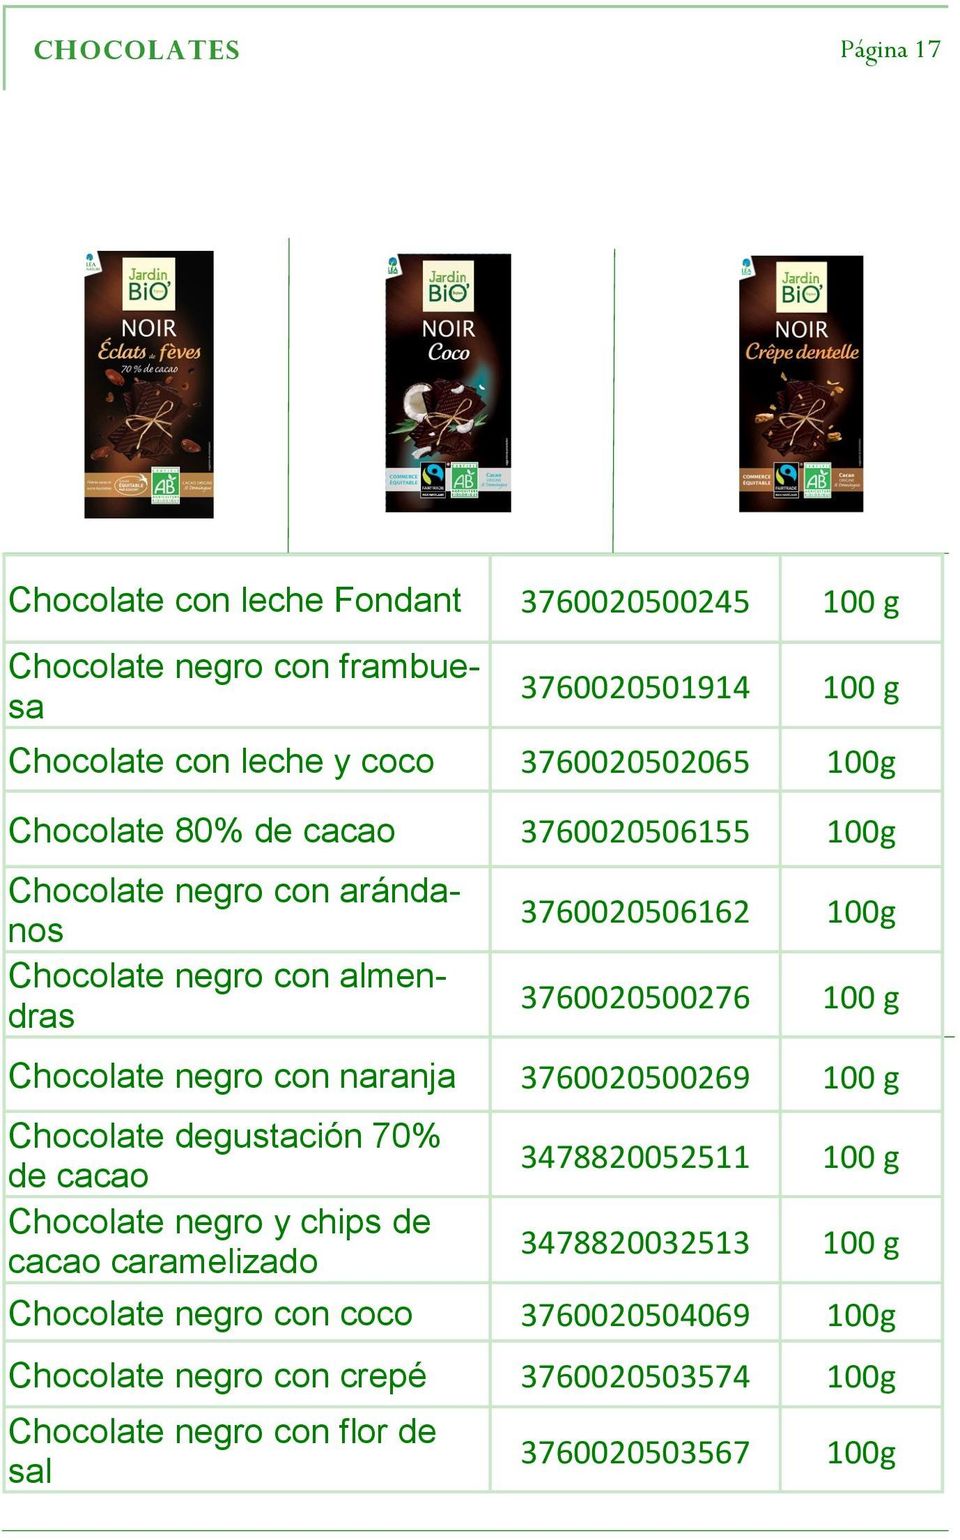 100 g Chocolate negro con naranja 3760020500269 100 g Chocolate degustación 70% de cacao Chocolate negro y chips de cacao caramelizado 3478820052511 100